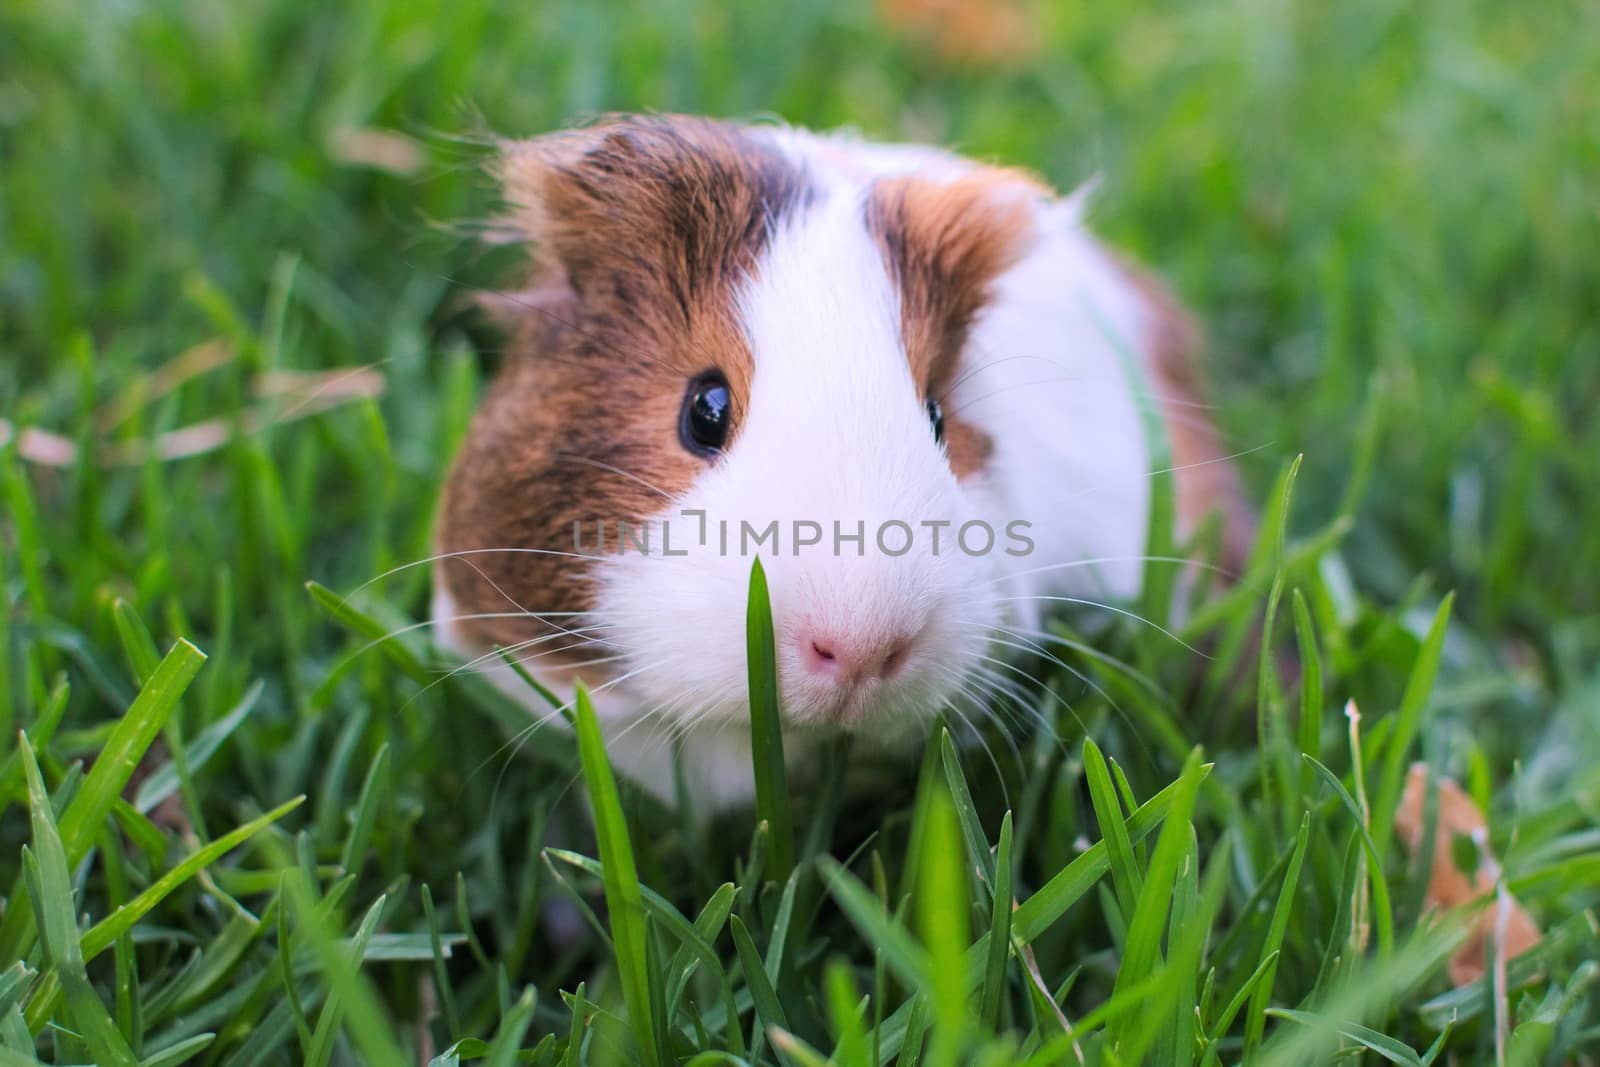 Cute guinea pig grazing on a green field by hernan_hyper